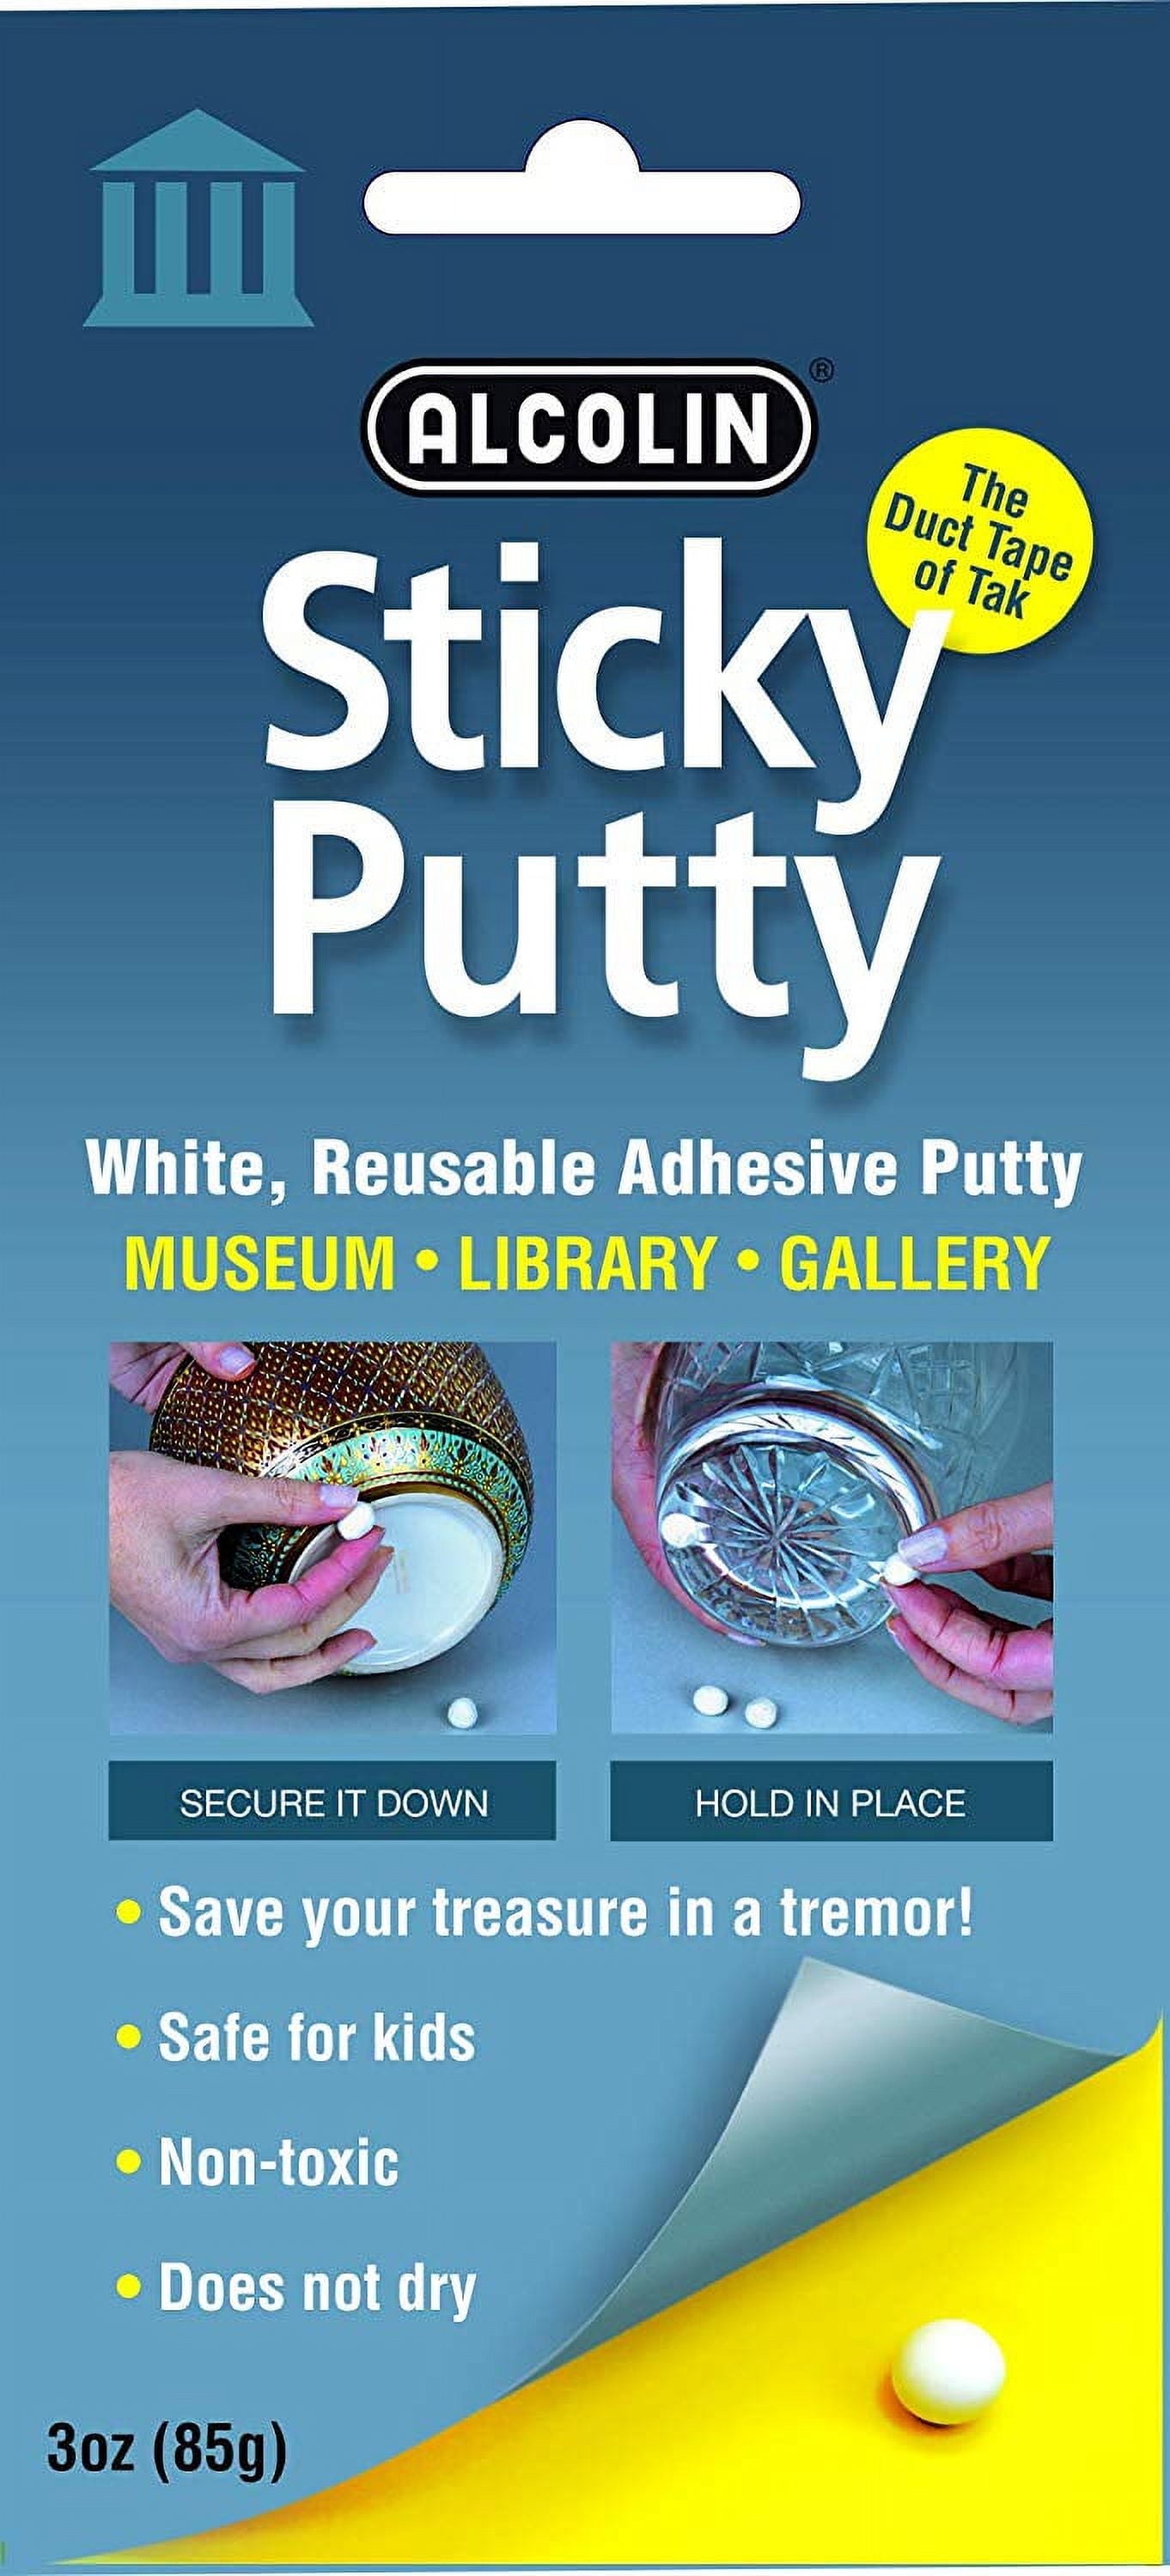 Alcolin Museum Sticky Putty, Installation Supplies, Exhibit & Display